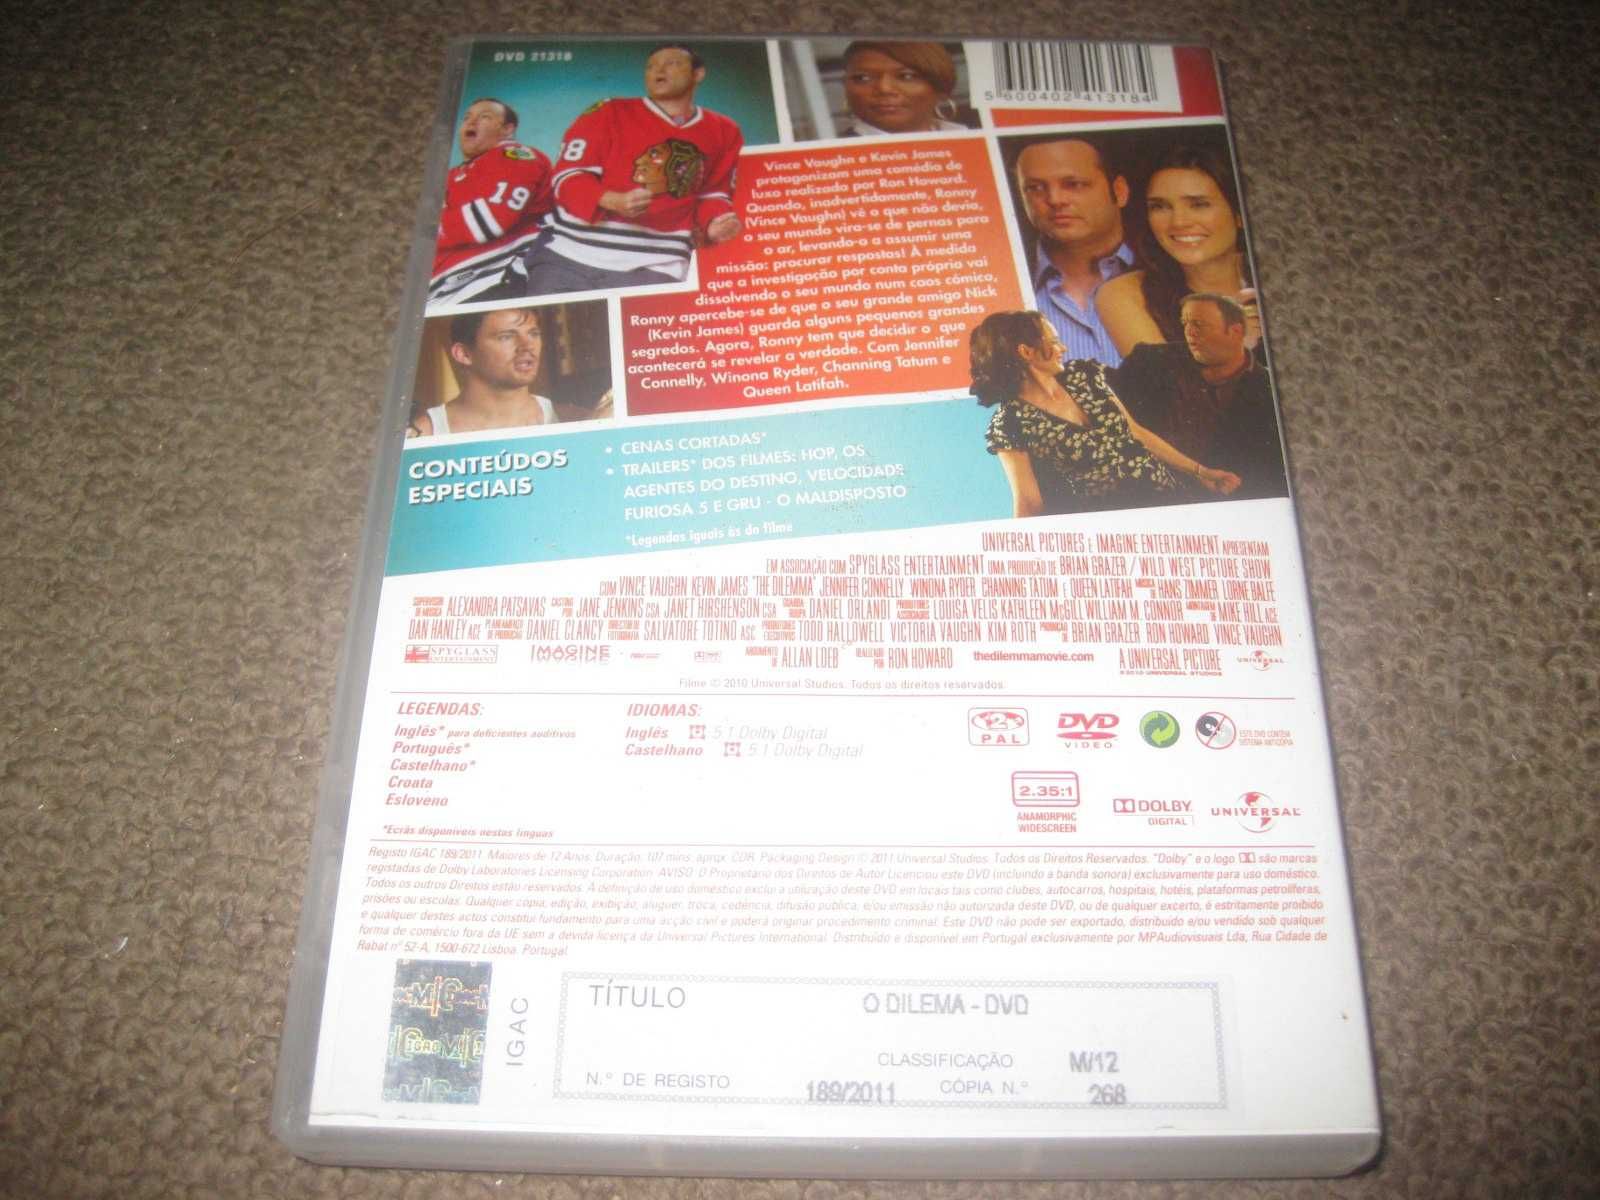 DVD "O Dilema" com Vince Vaughn